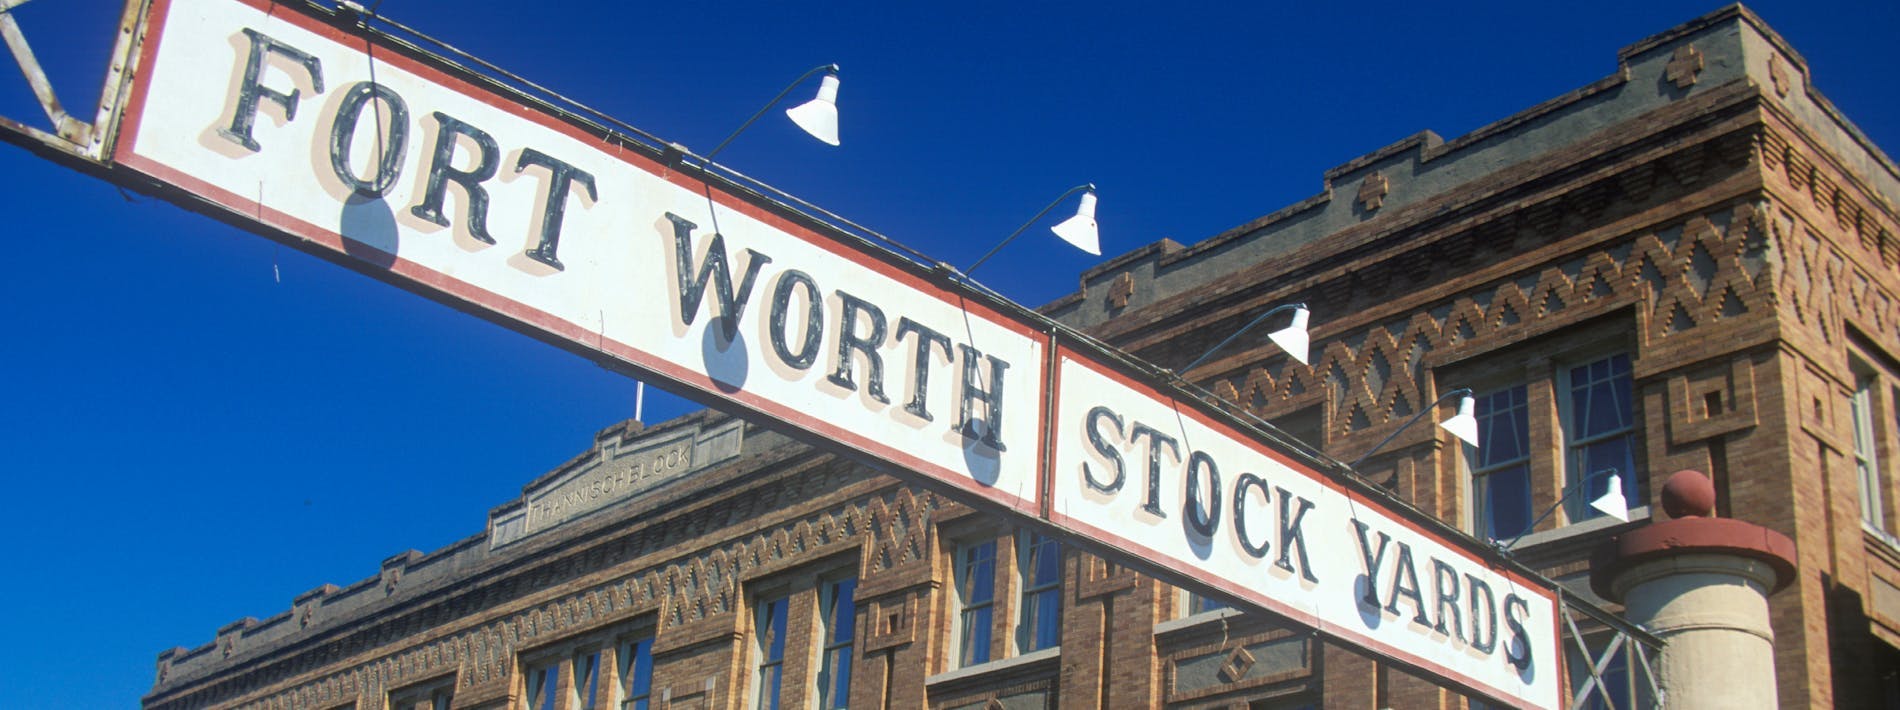 Fort Worth Texas Stock Yards Image